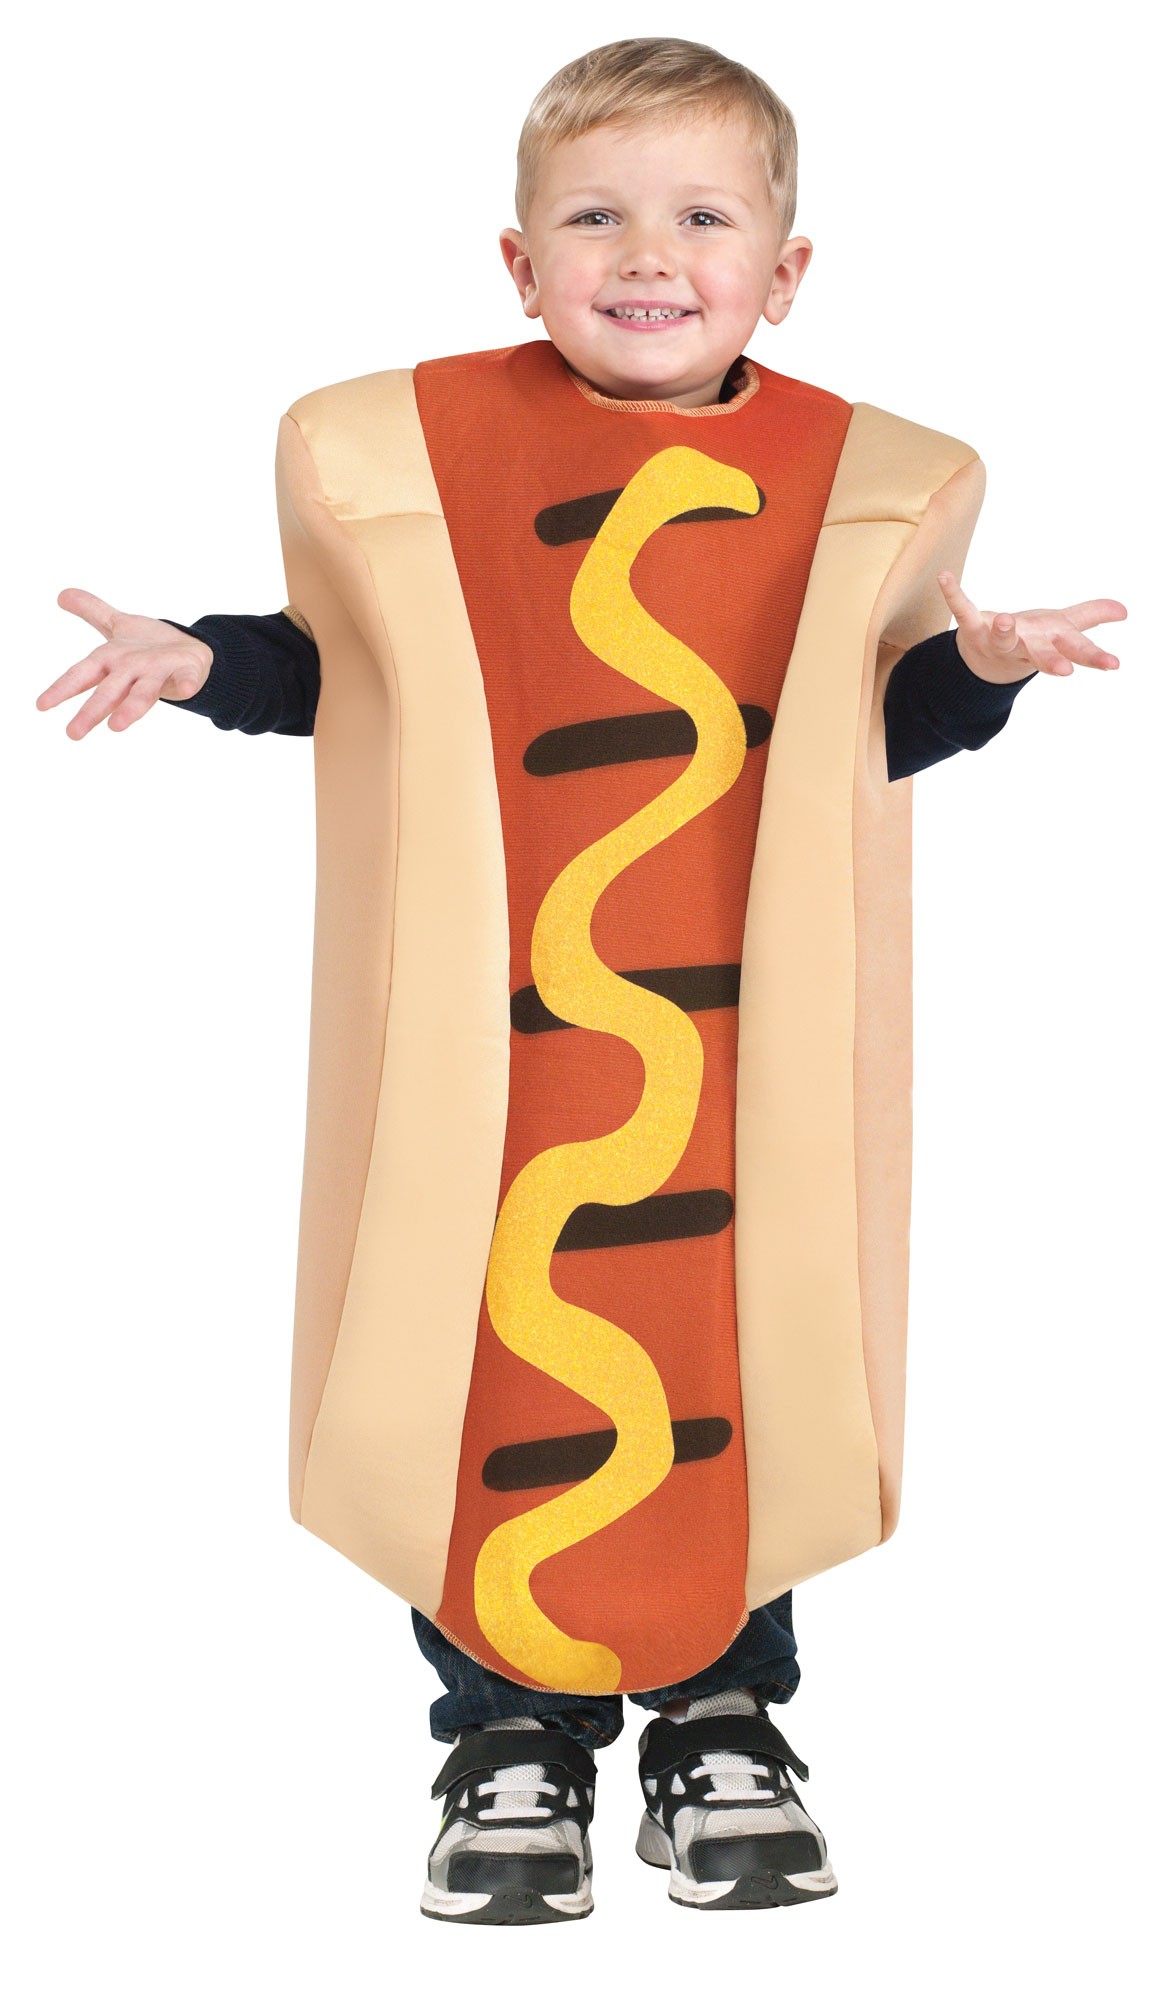 Unisex Hot Dog Toddler Costume, Multicolor, One Size